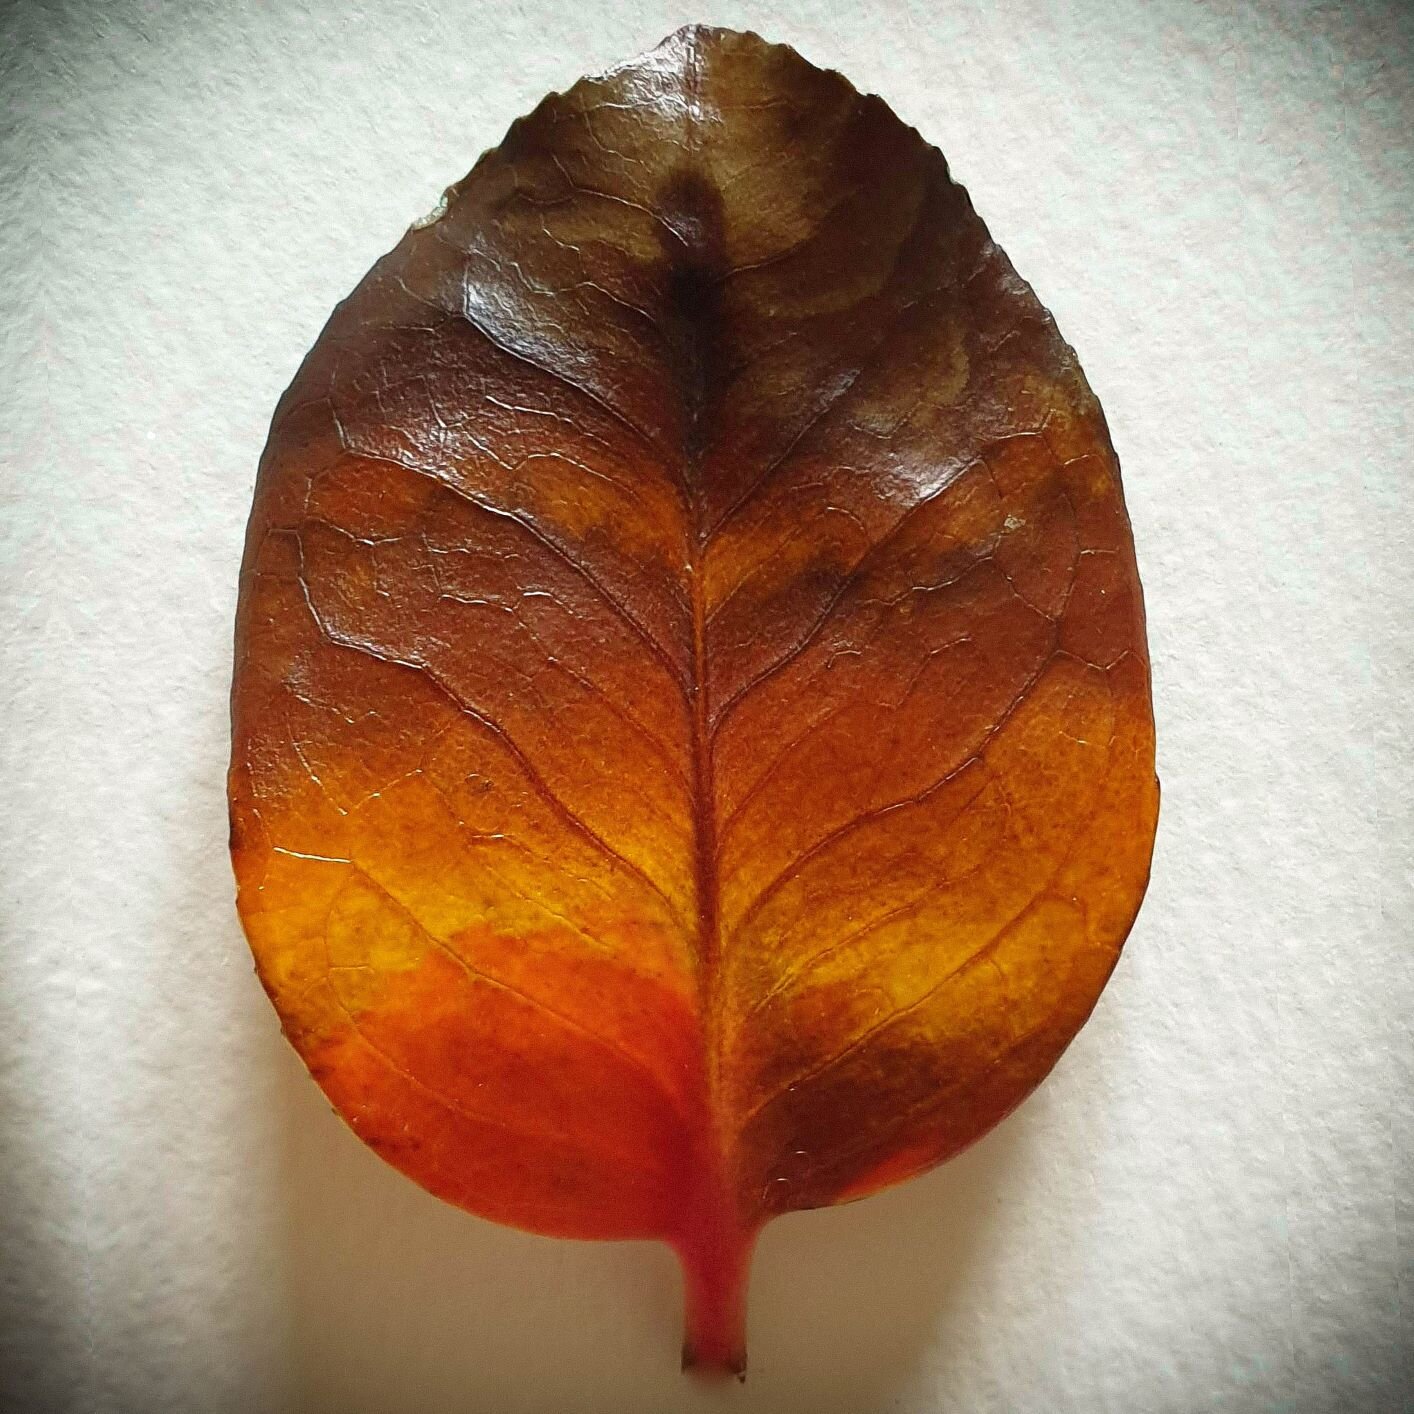 Laurel leaf from the garden